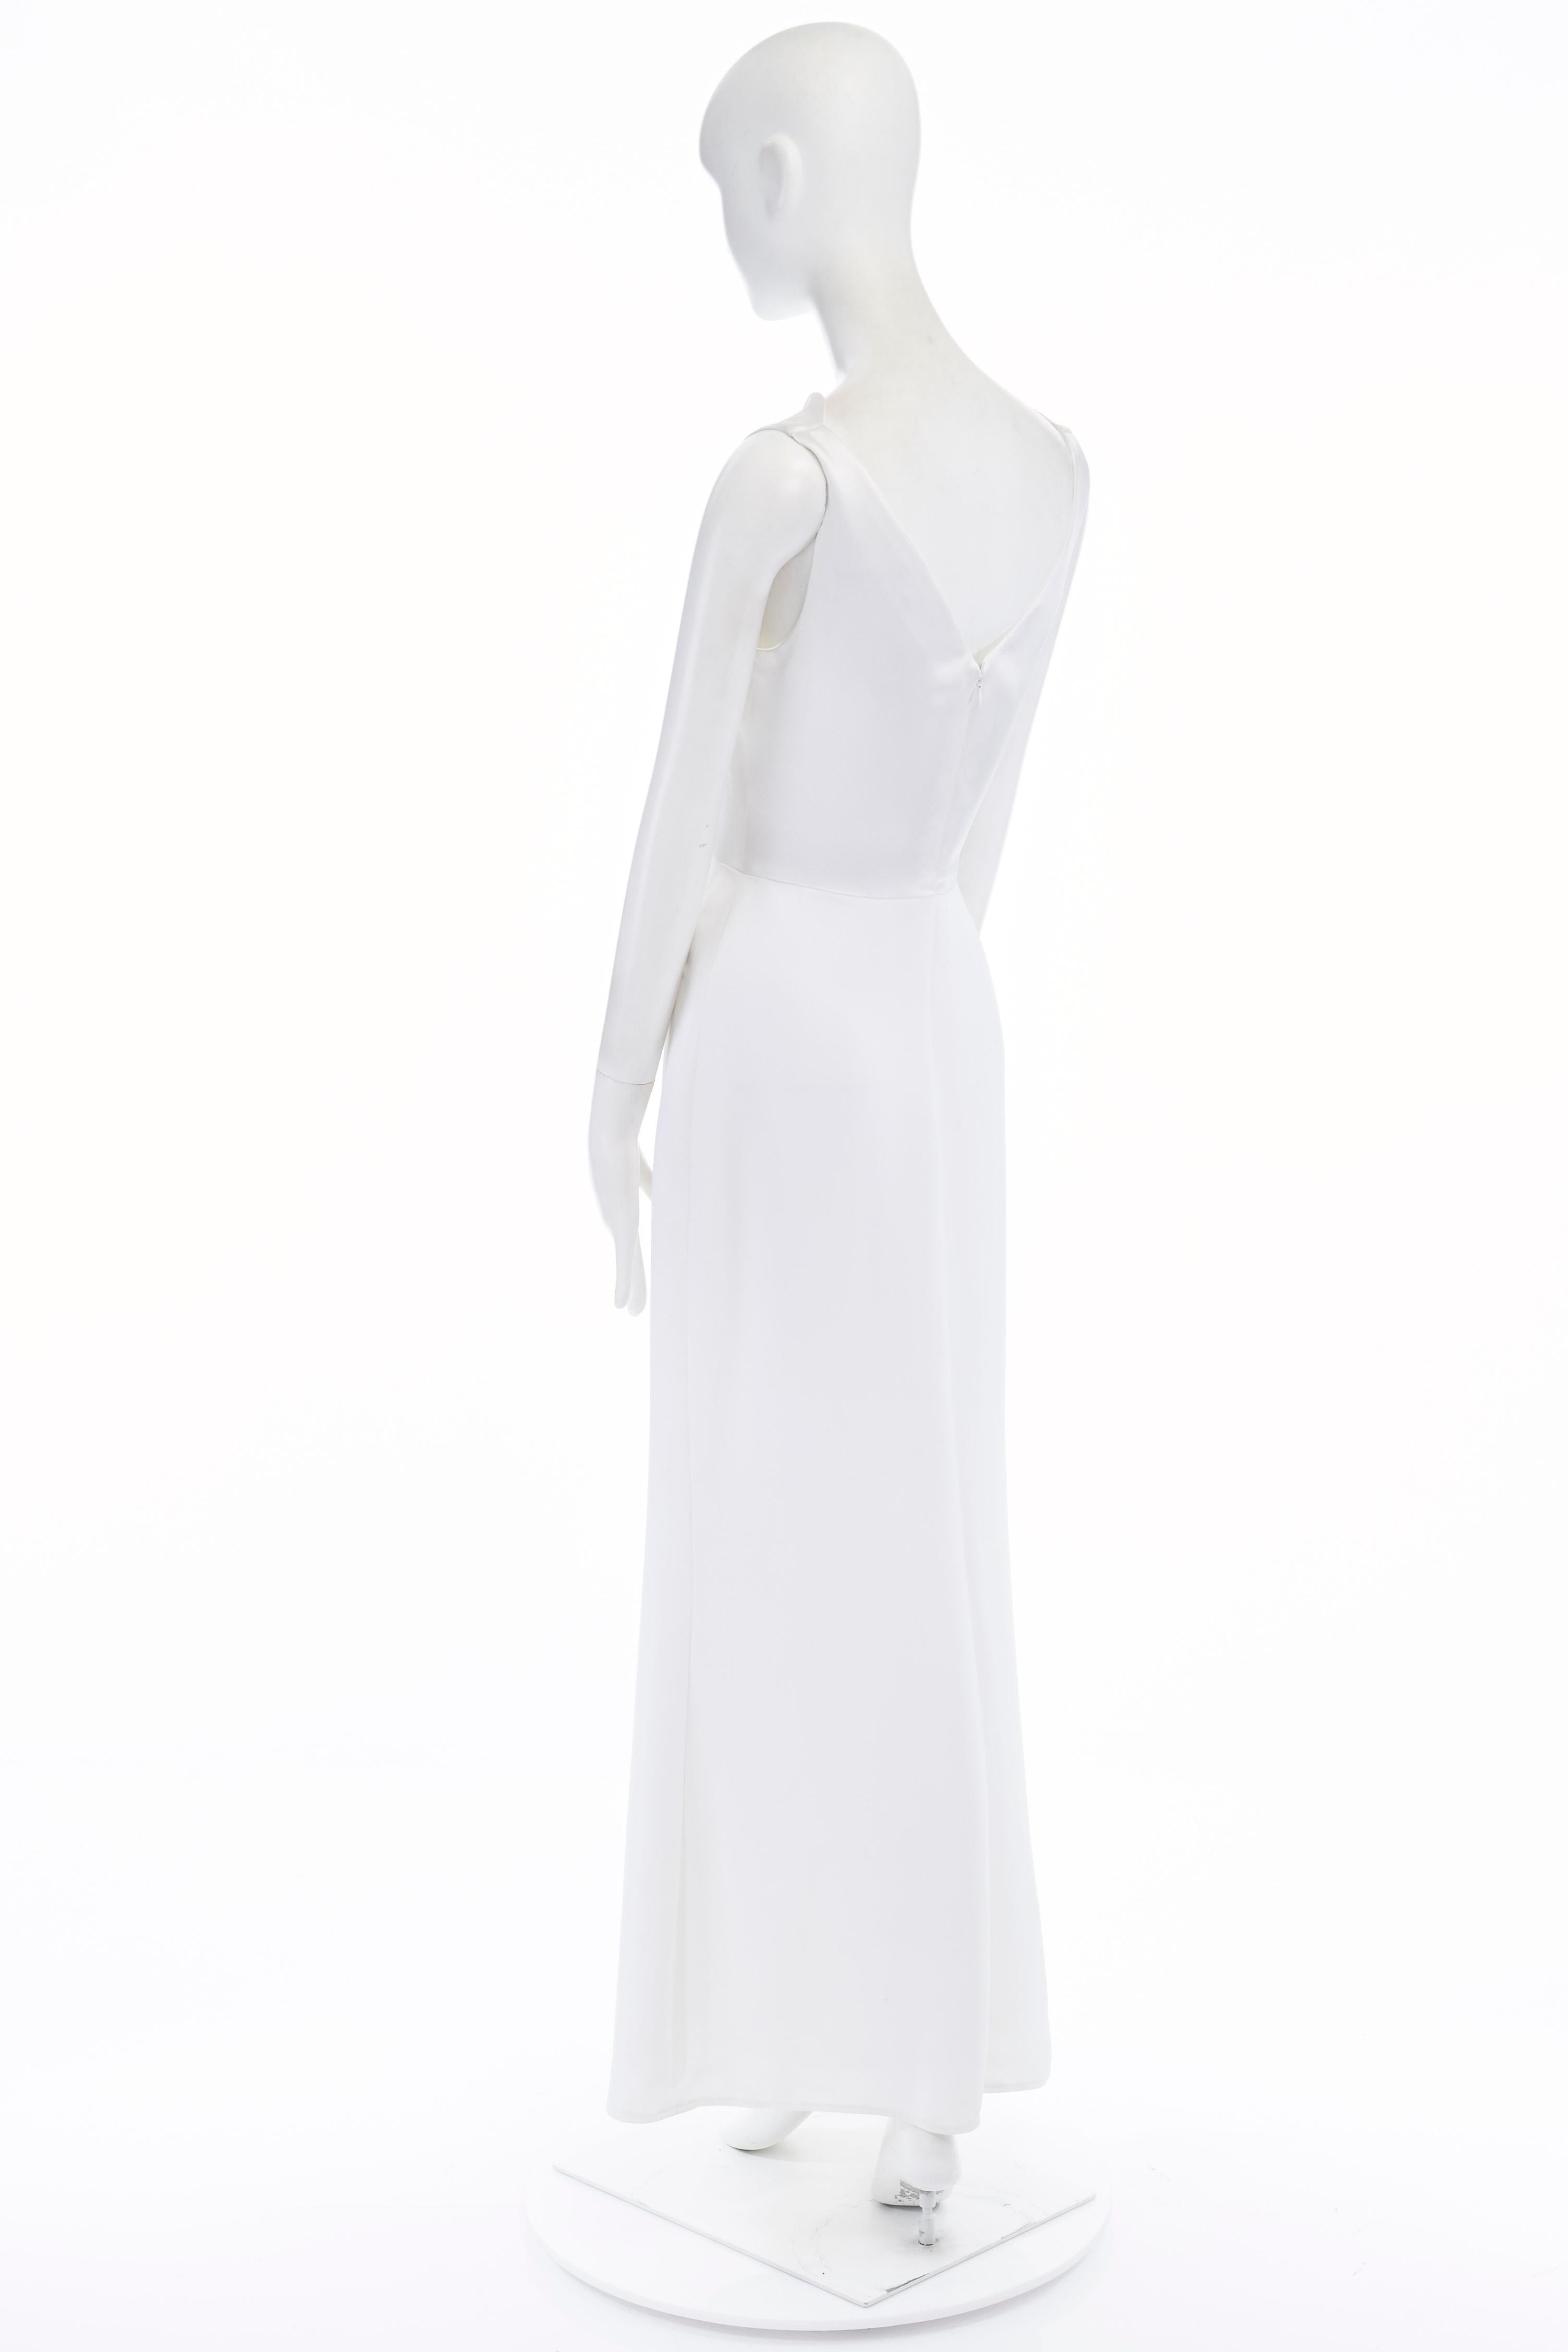 Gray BADGLEY MISCHKA white draped neckline viscose top V-back maxi gown dress US6 S